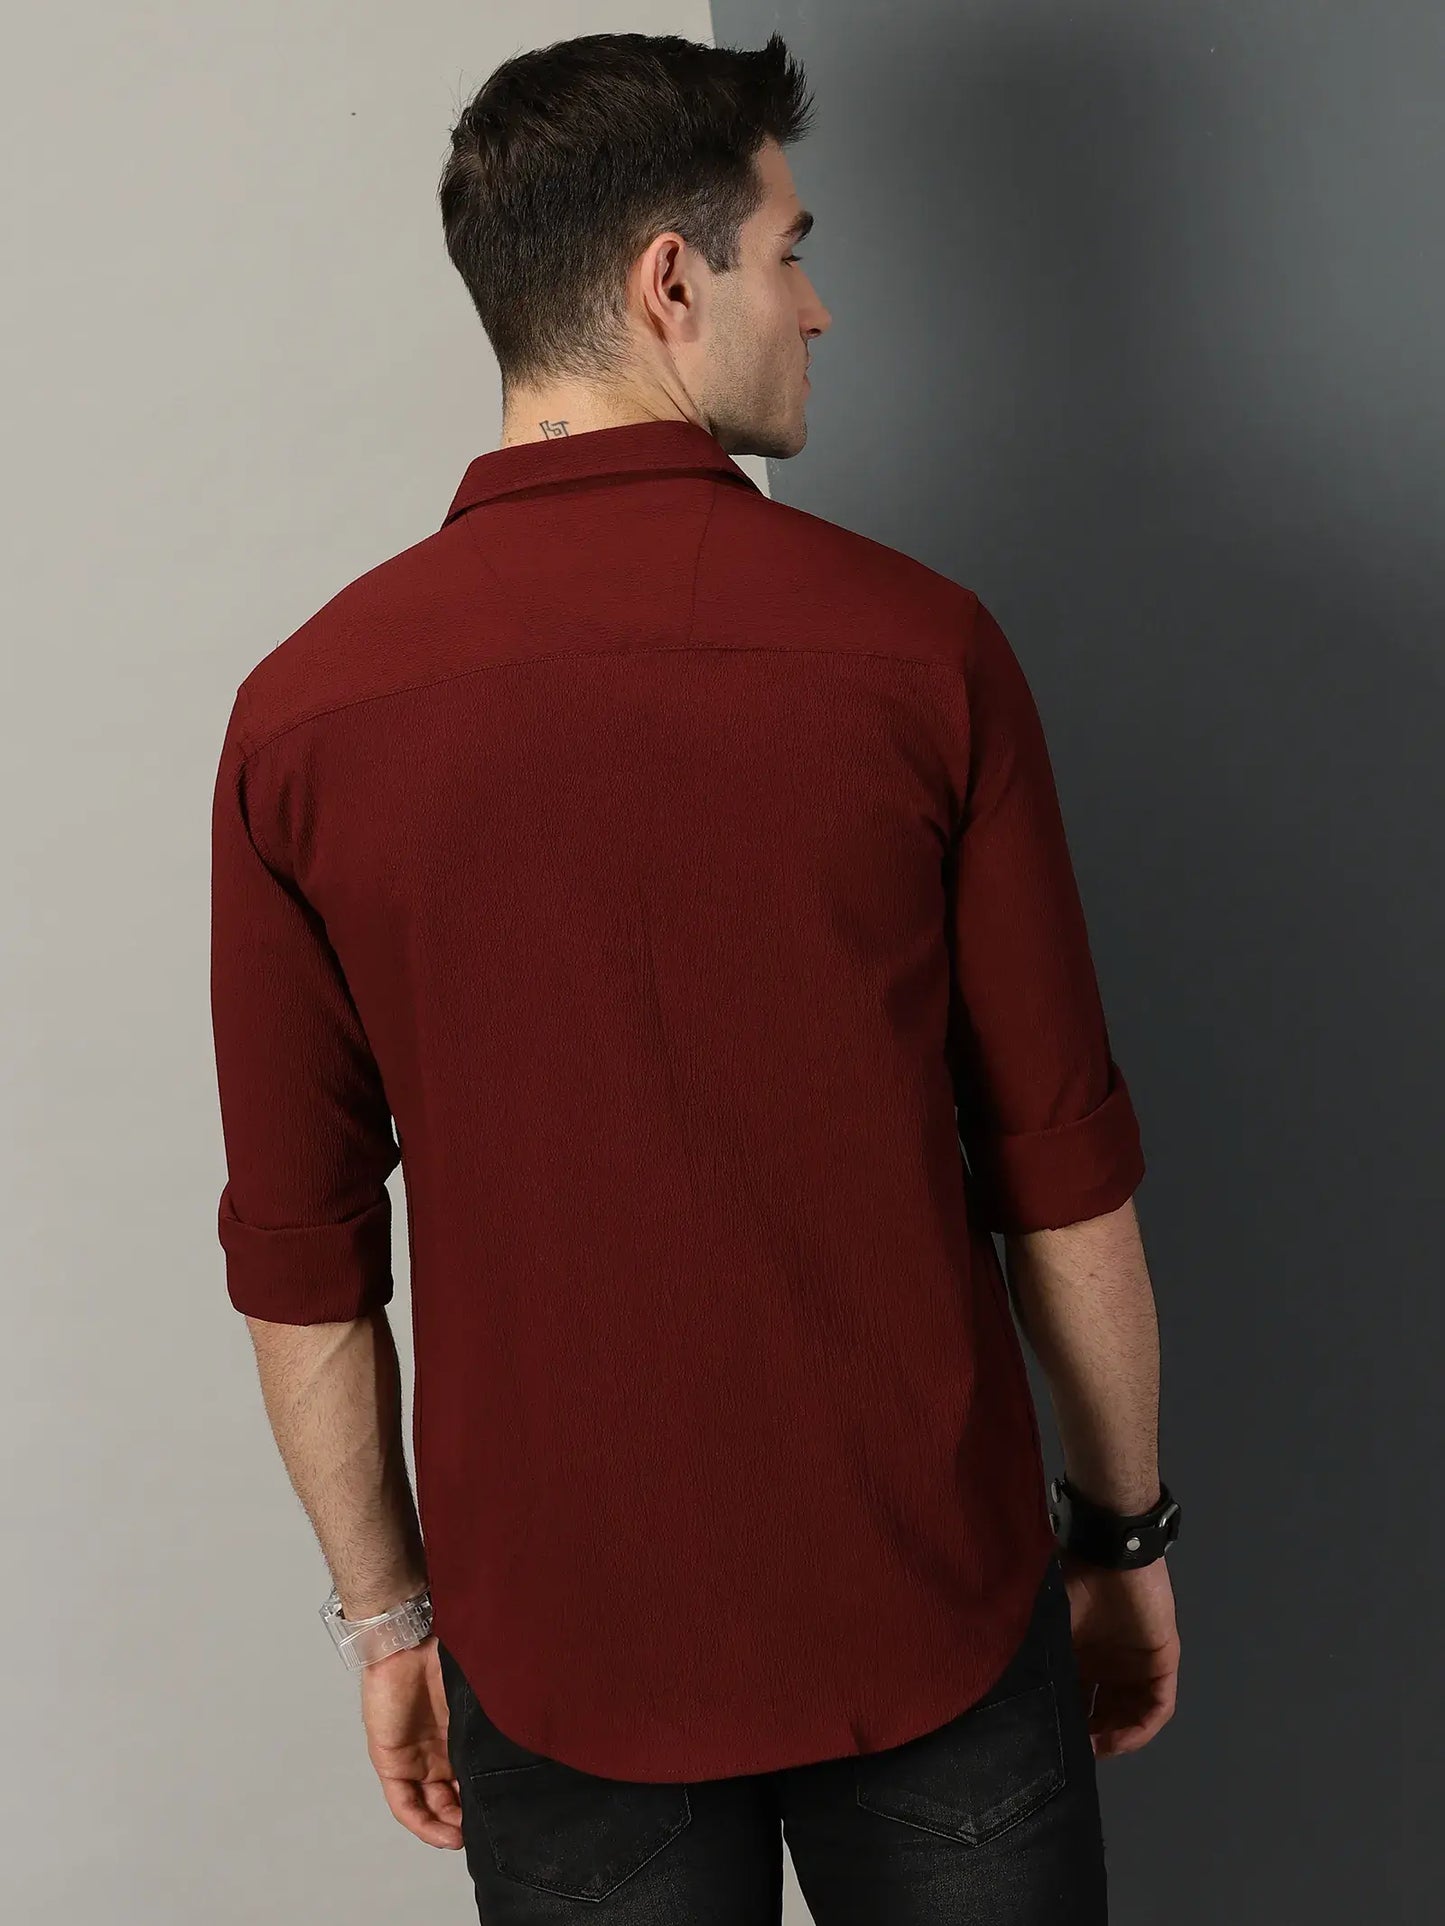 Maroon Textured Full Sleeve Men's Shirt